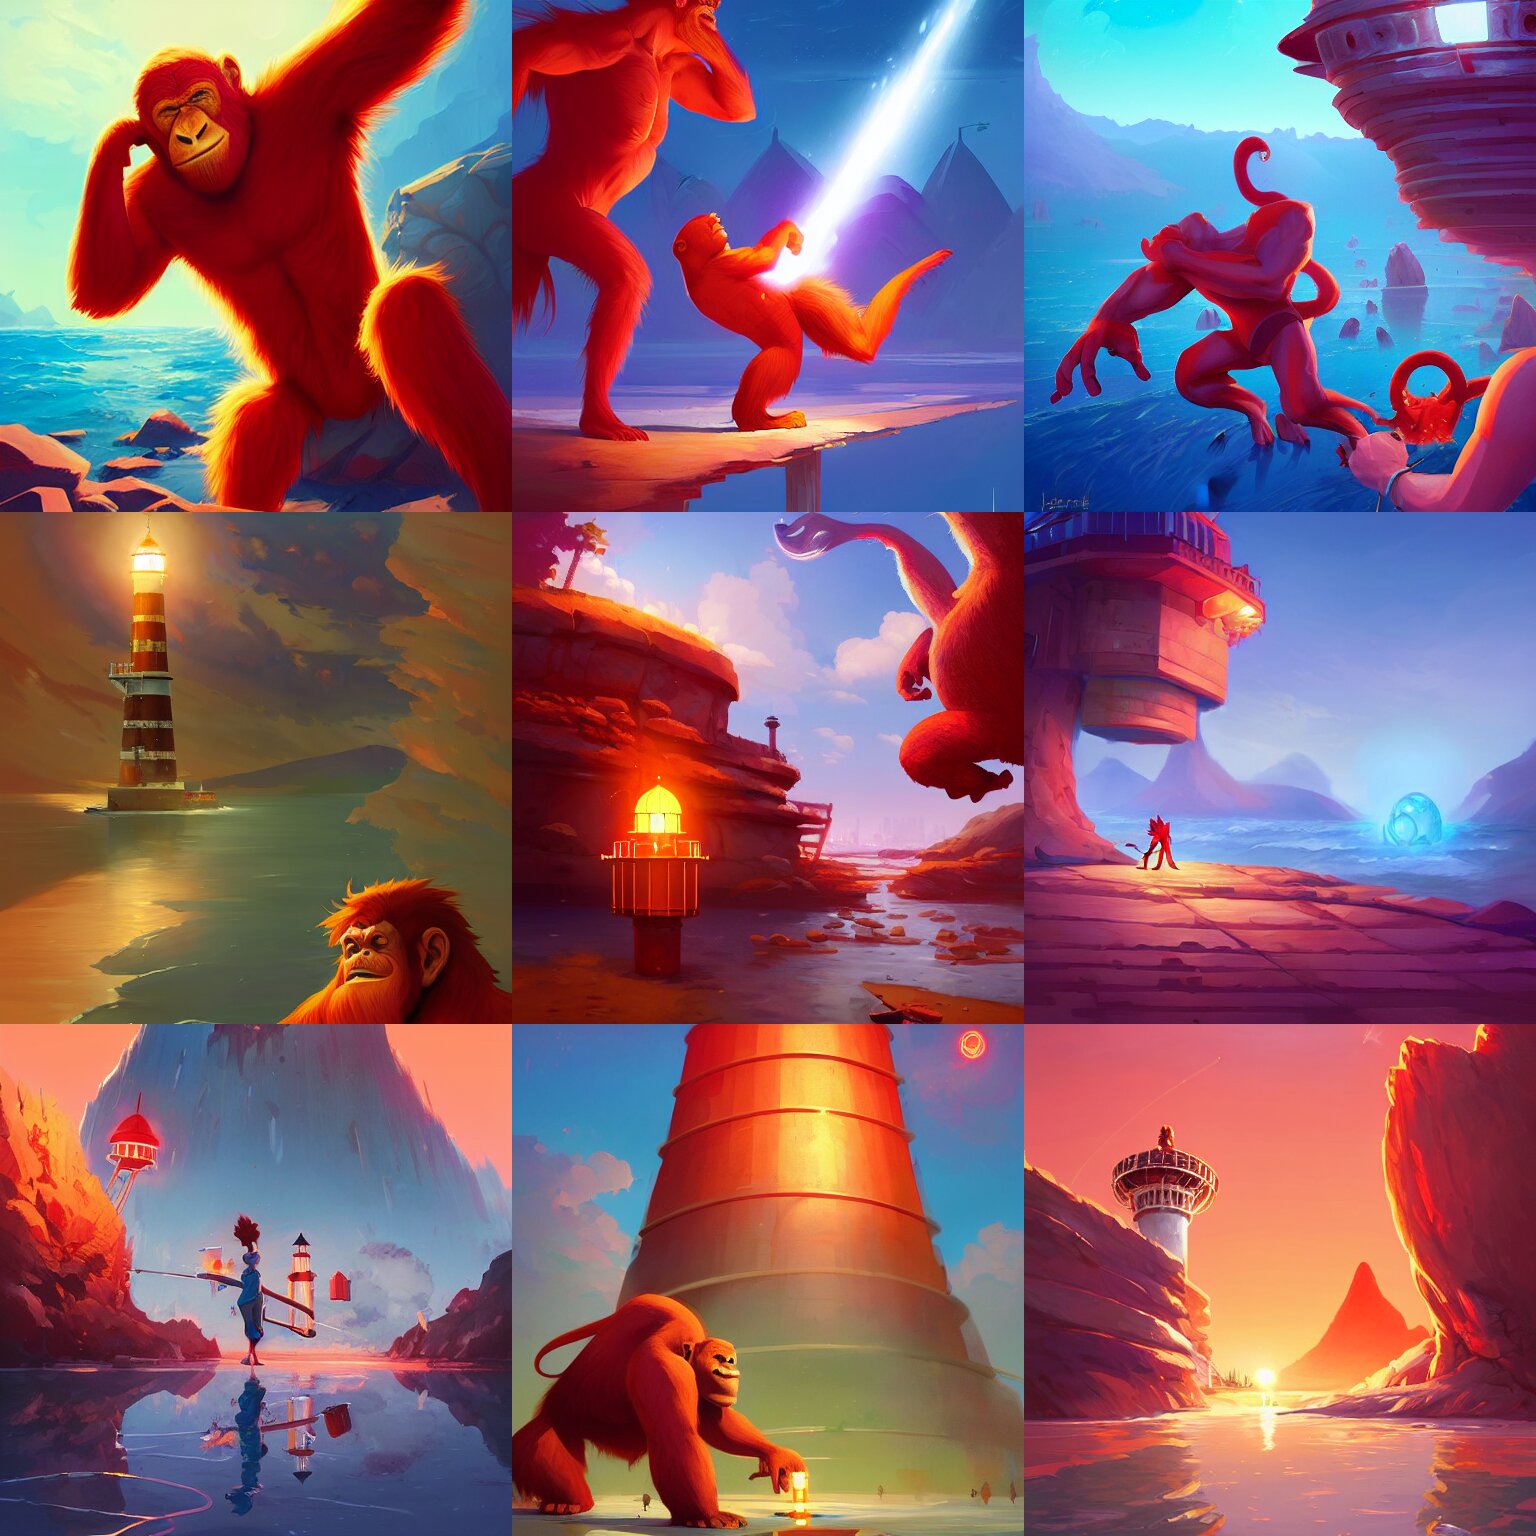 hero world atari, red orangutan shake lighthouse as big shaker, behance hd by jesper ejsing, by rhads, makoto shinkai and lois van baarle, ilya kuvshinov, rossdraws global illumination 